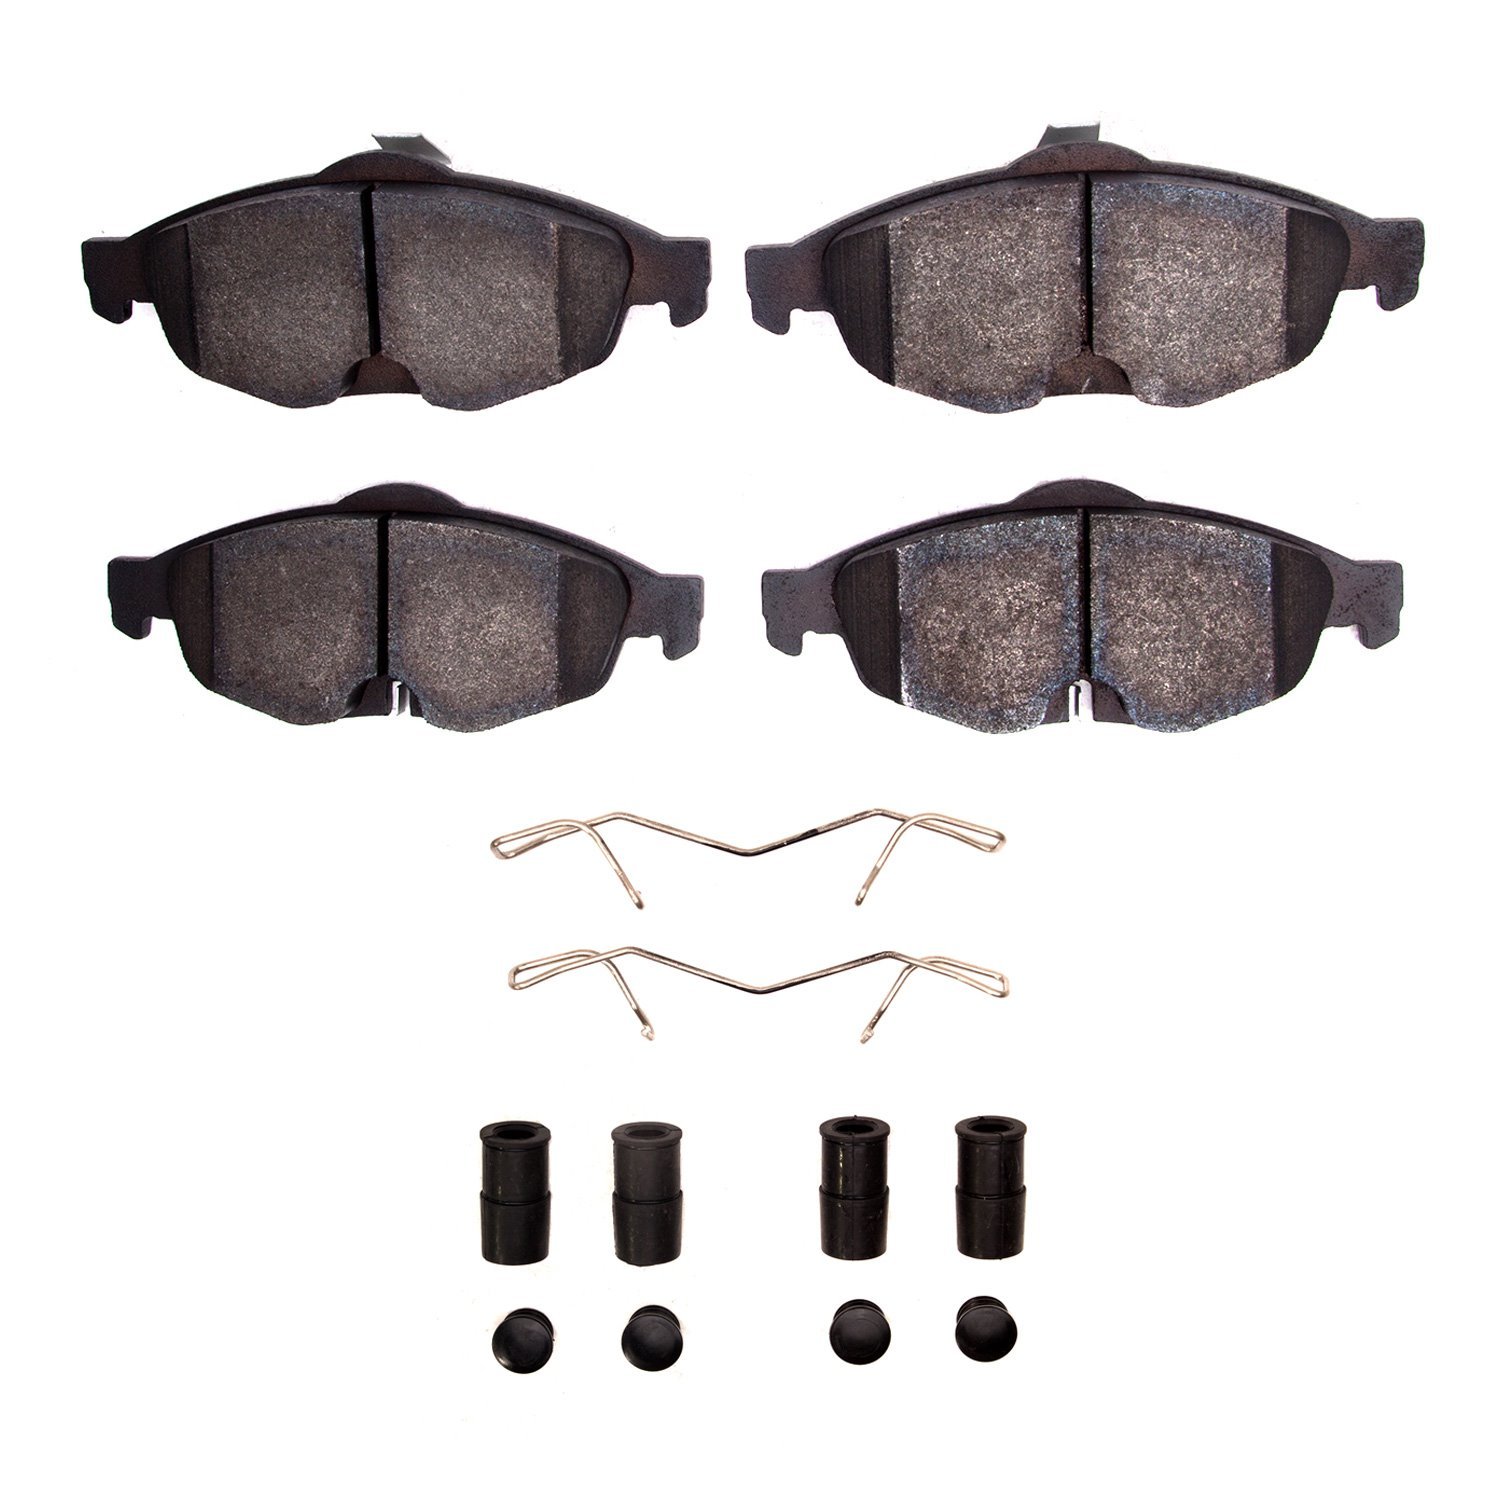 1310-0869-01 3000-Series Ceramic Brake Pads & Hardware Kit, 2001-2006 Mopar, Position: Front